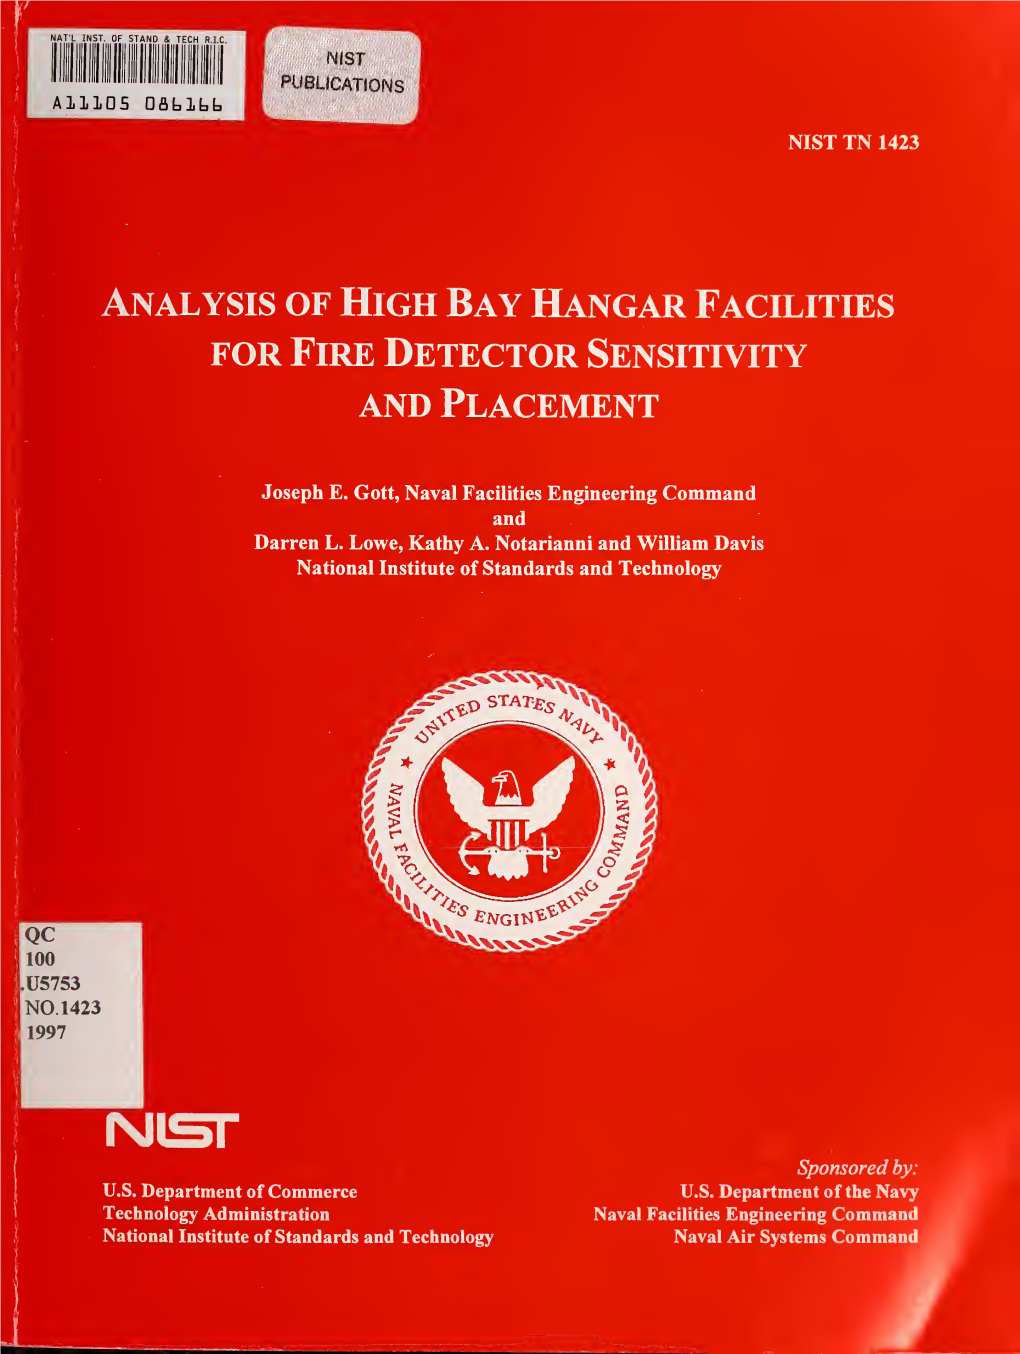 Analysis of High Bay Hangar Facilities for Fire Dectector Sensitivity And